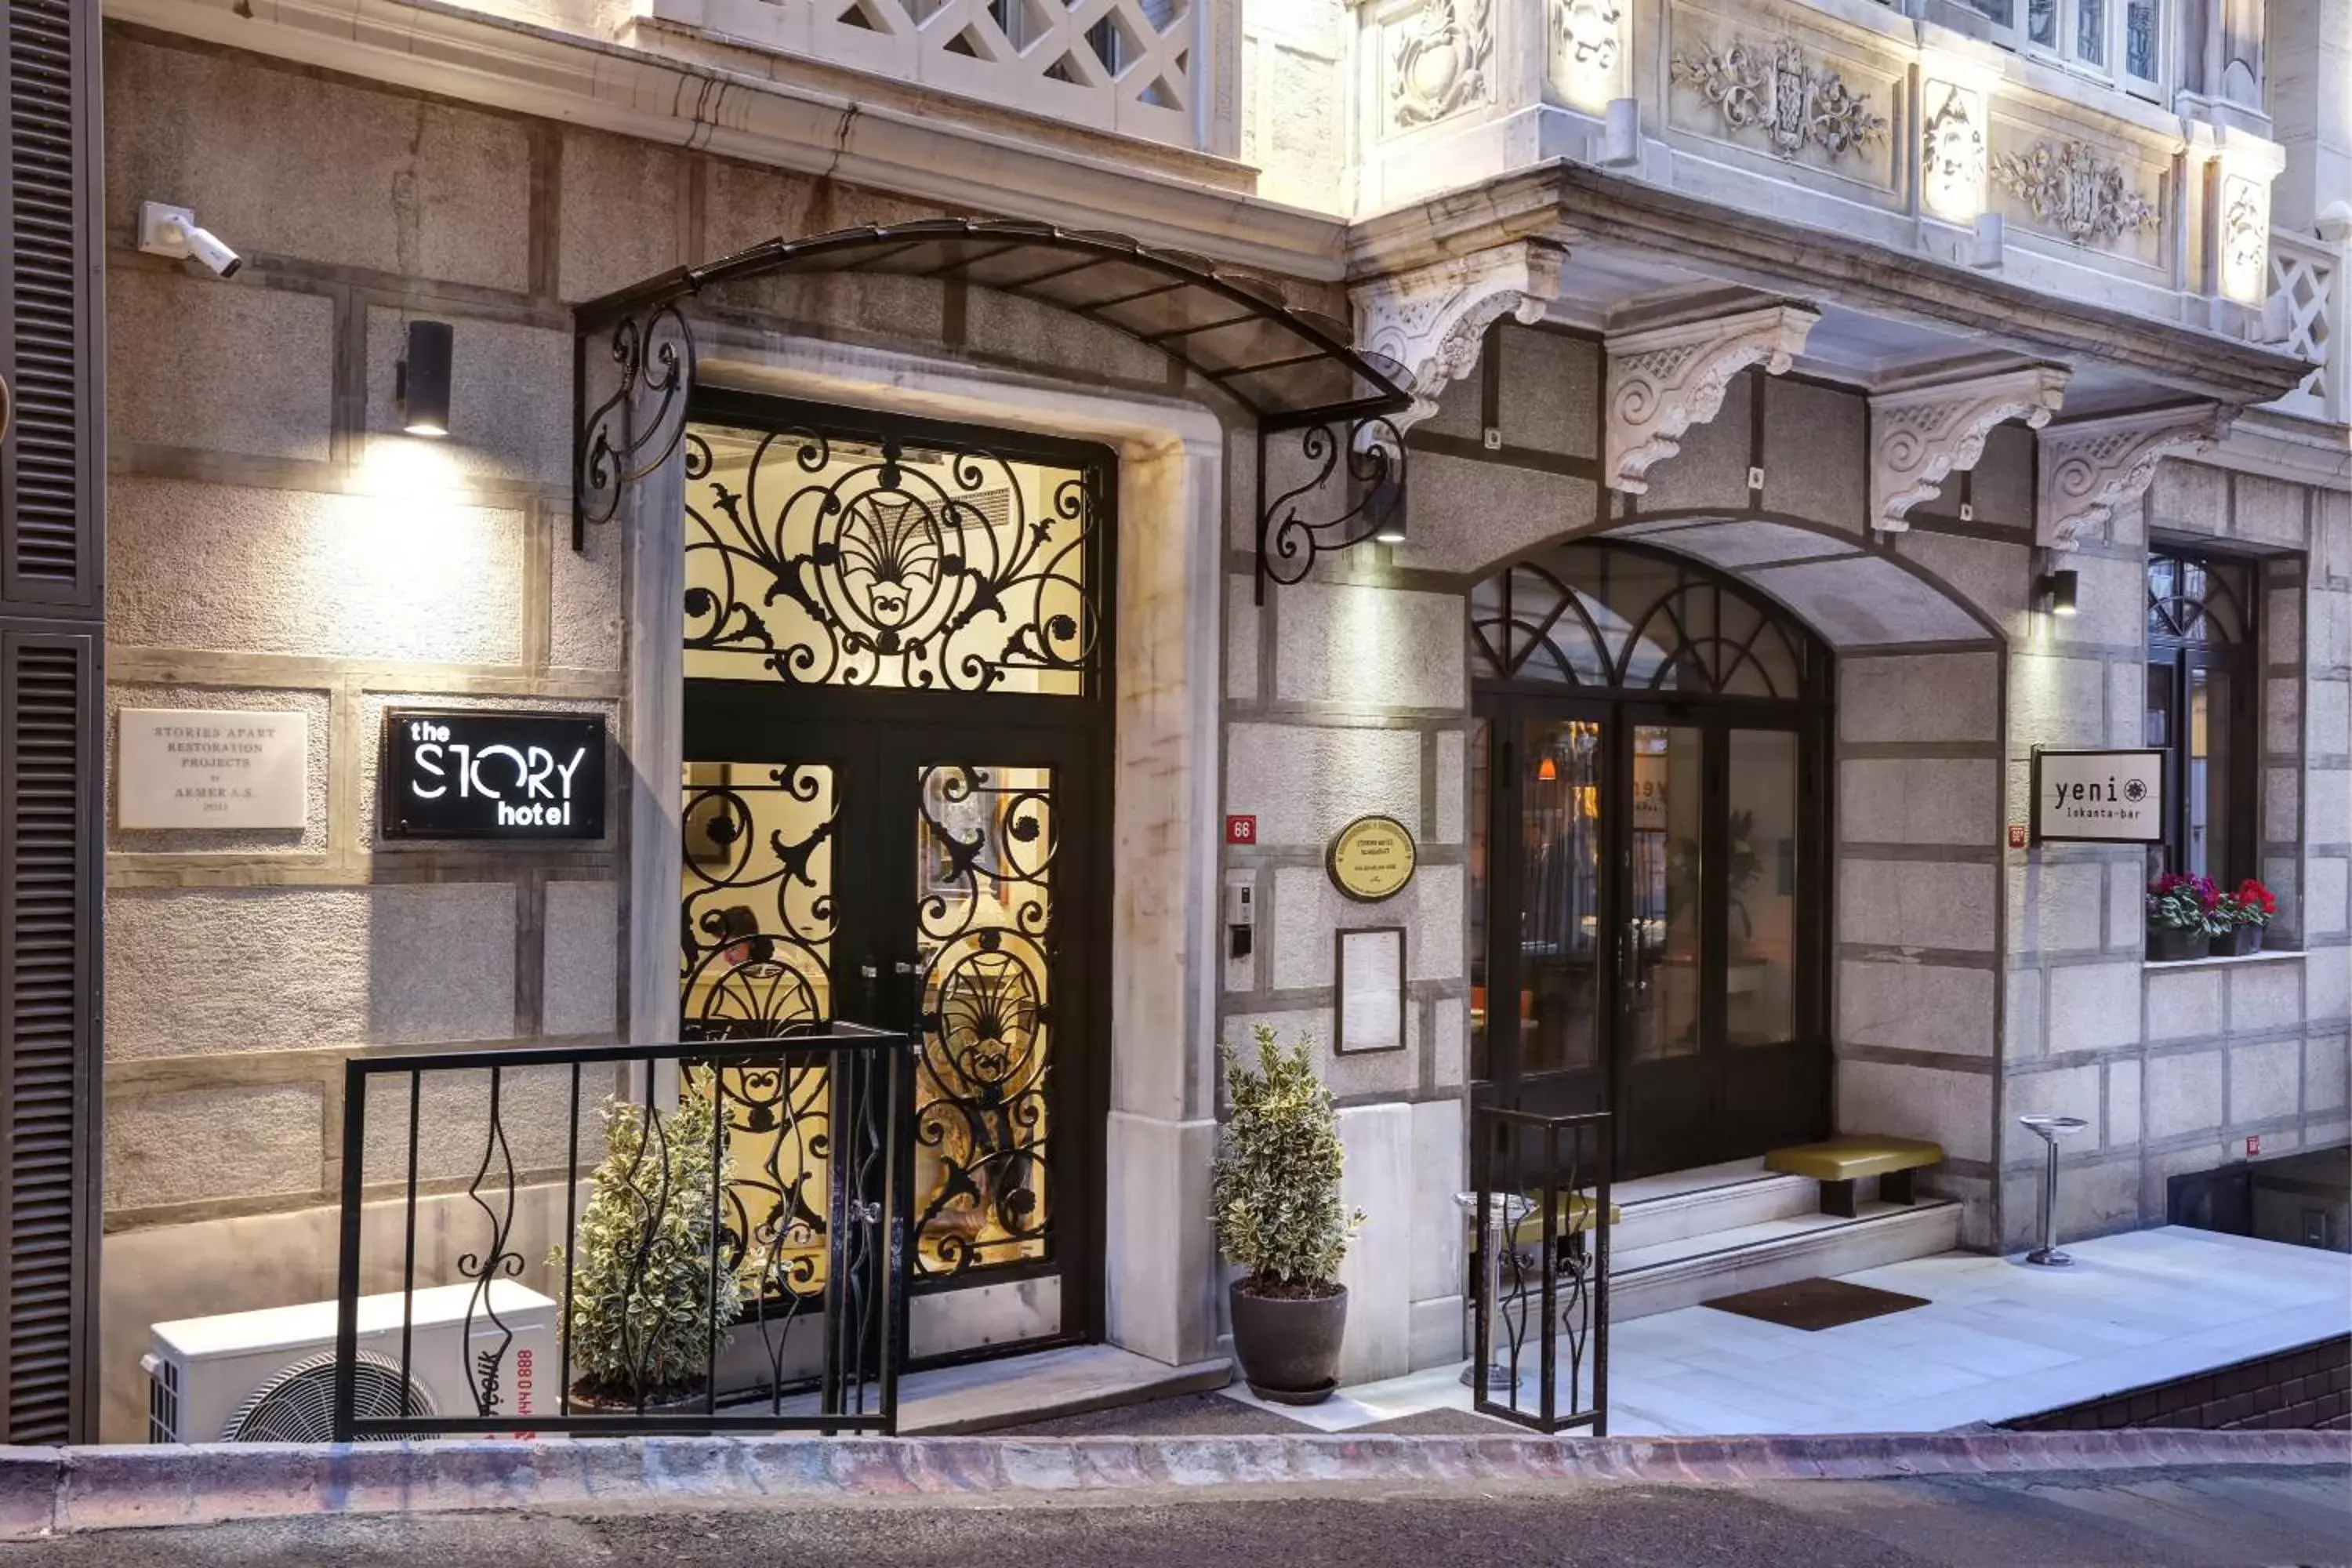 Facade/entrance in The Story Hotel Pera